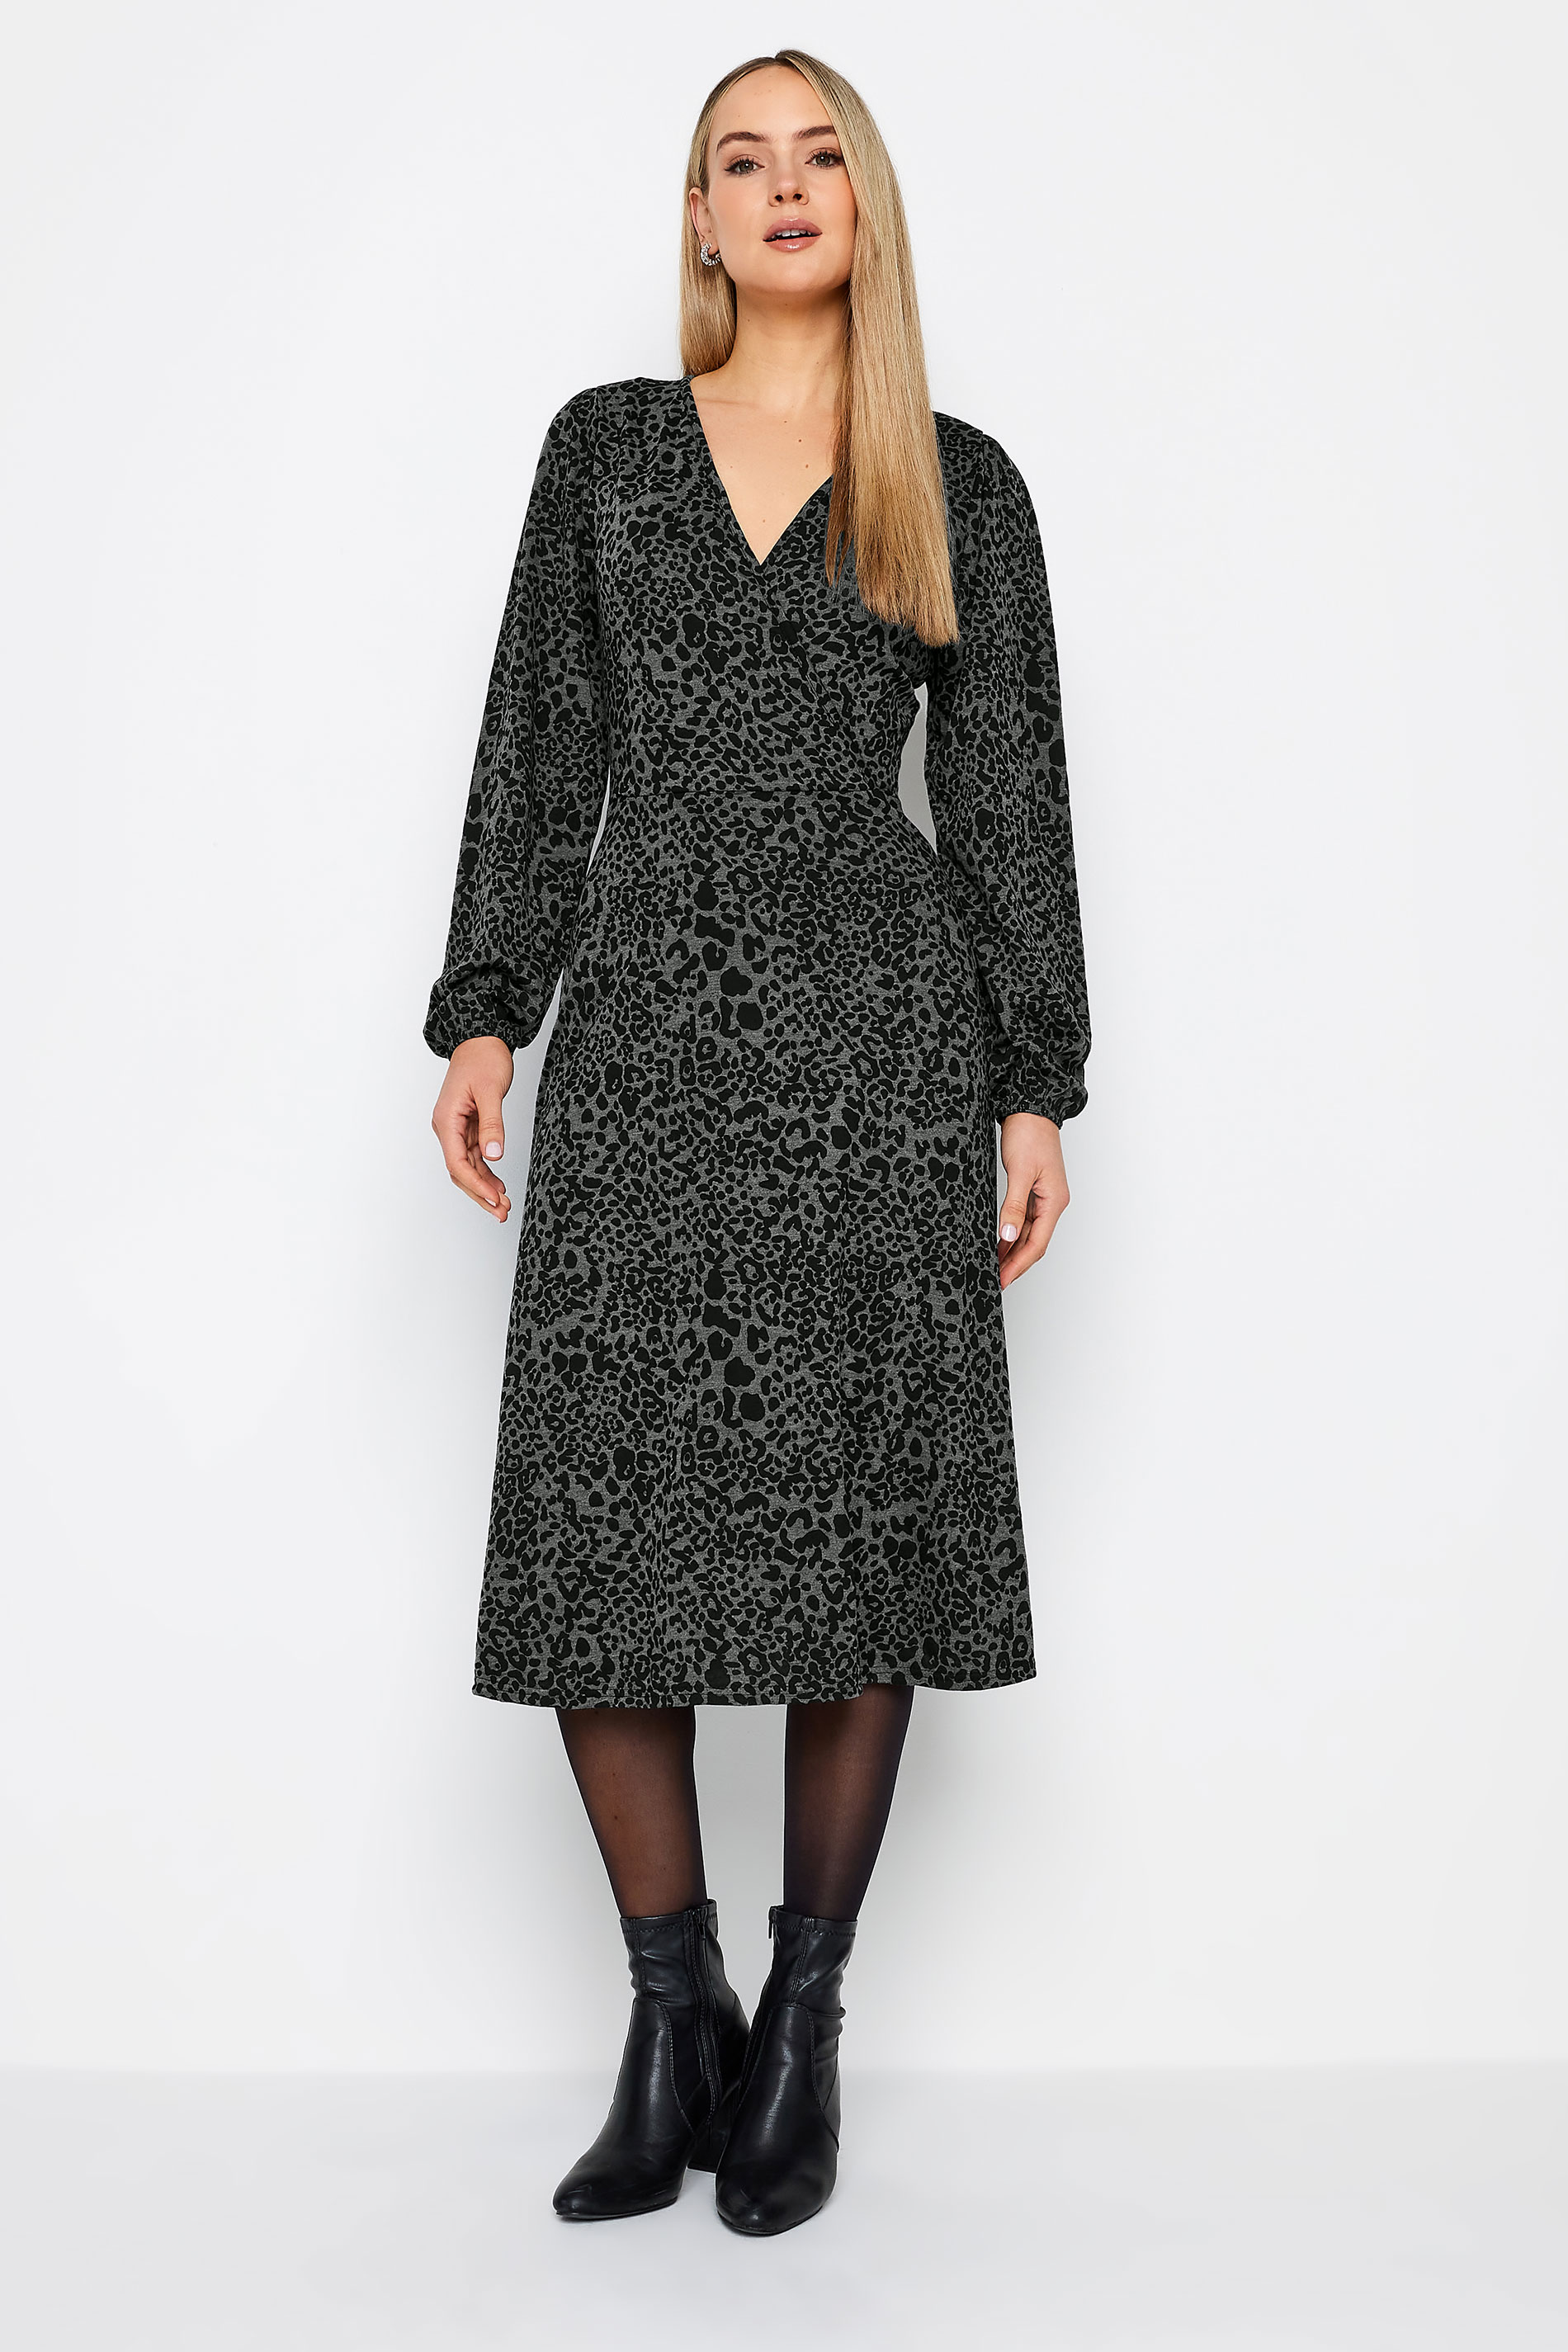 LTS Tall Women's Charcoal Grey Leopard Print Wrap Dress | Long Tall Sally 1